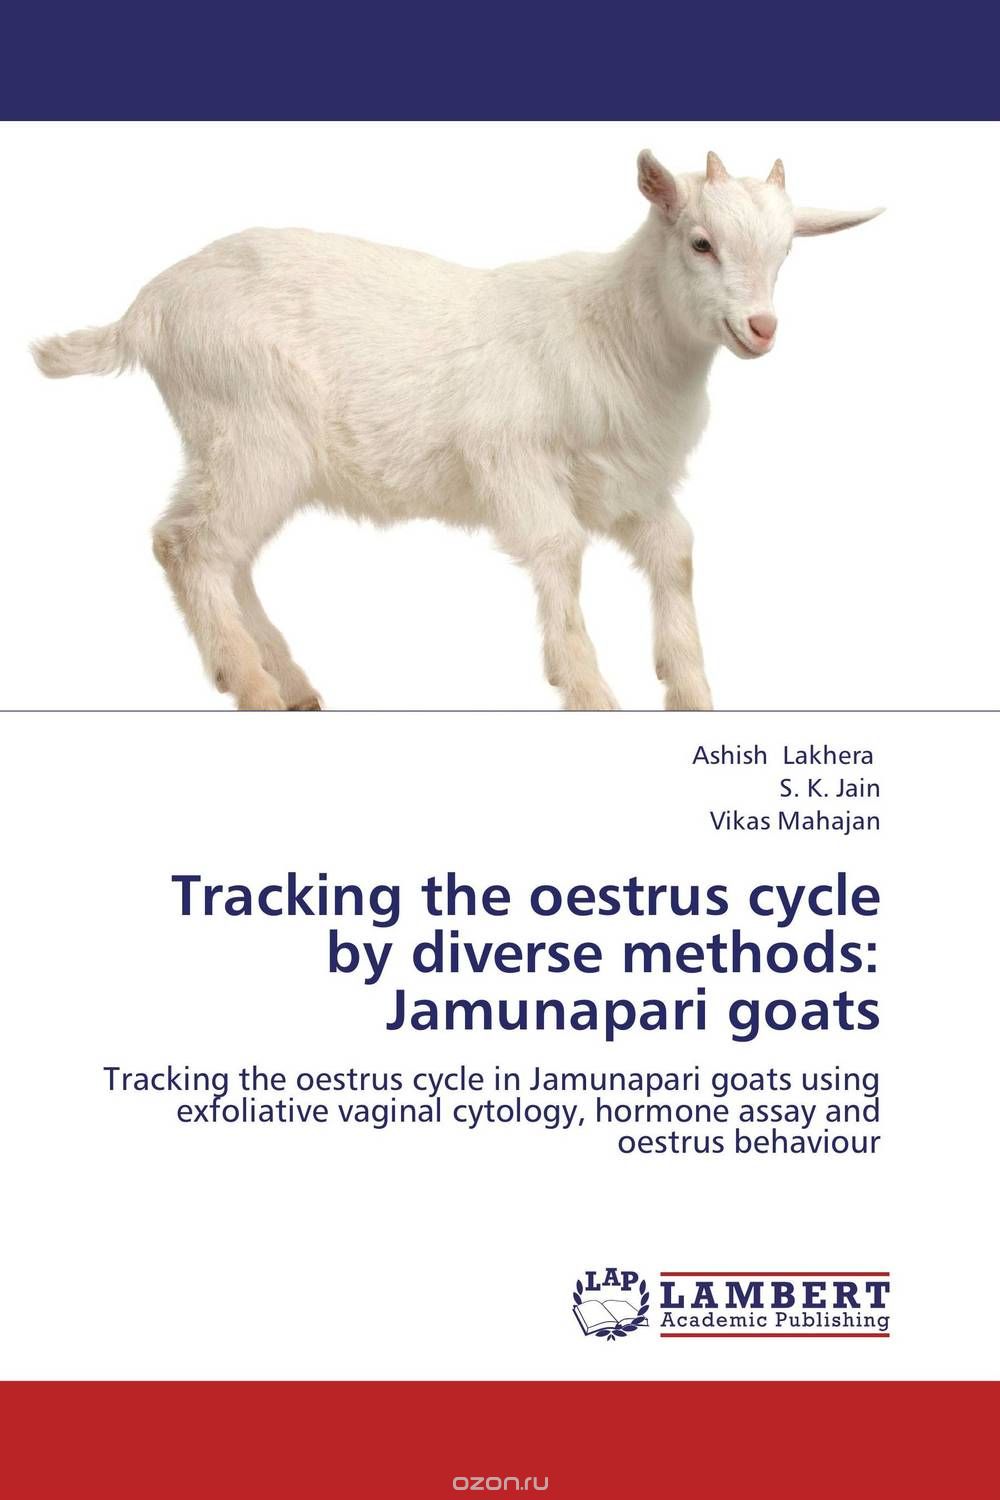 Скачать книгу "Tracking the oestrus cycle by diverse methods: Jamunapari goats"